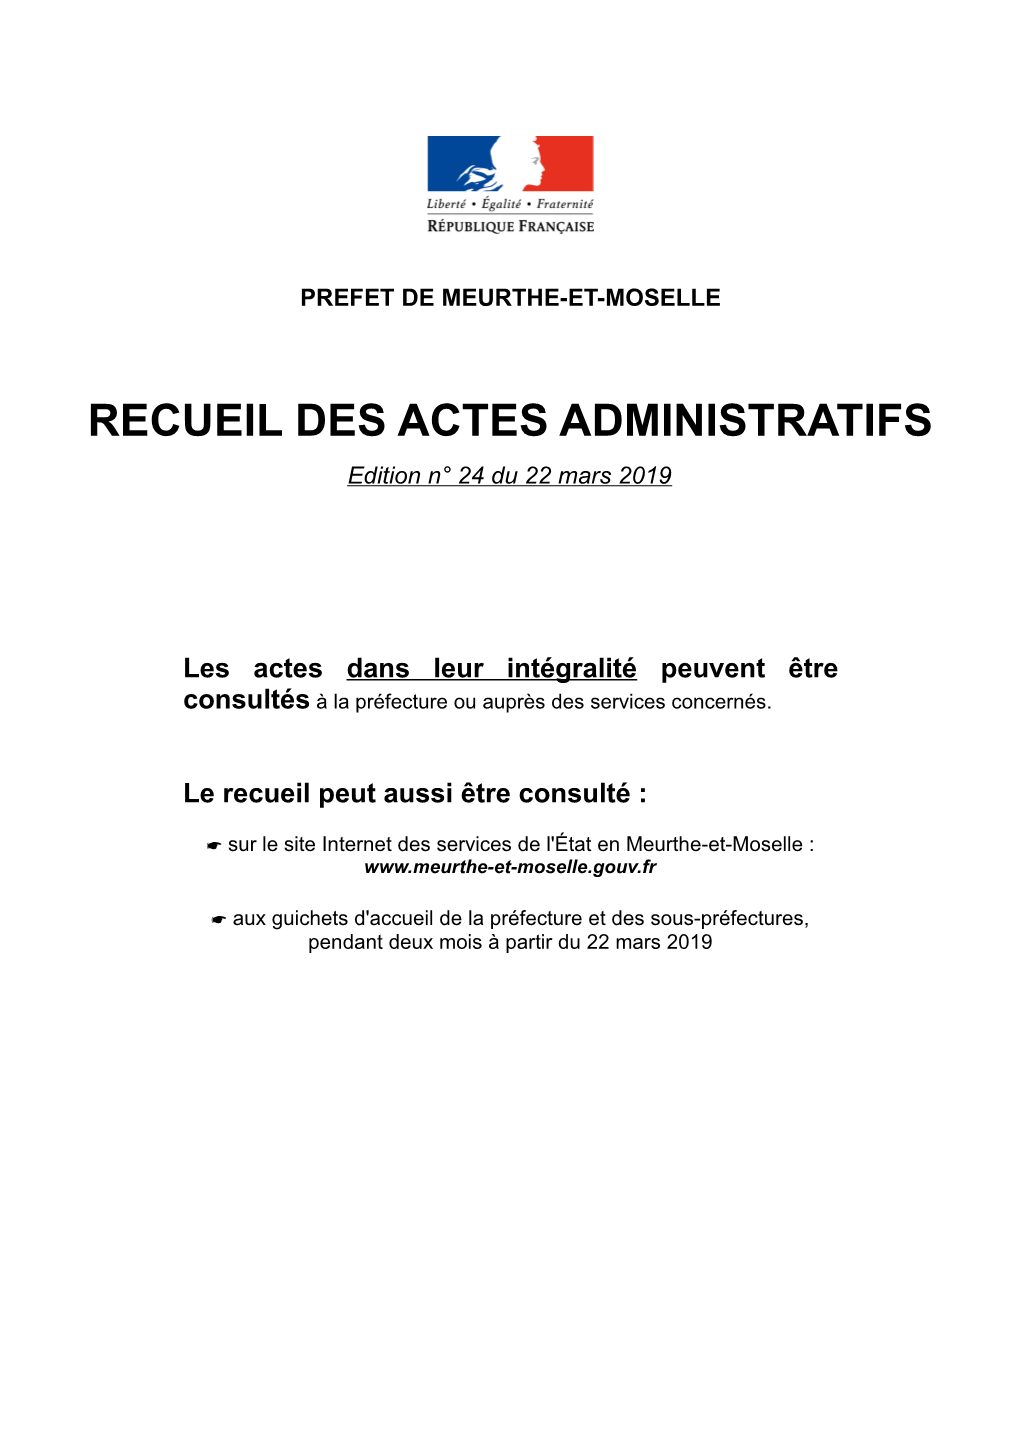 RECUEIL DES ACTES ADMINISTRATIFS Edition N° 24 Du 22 Mars 2019